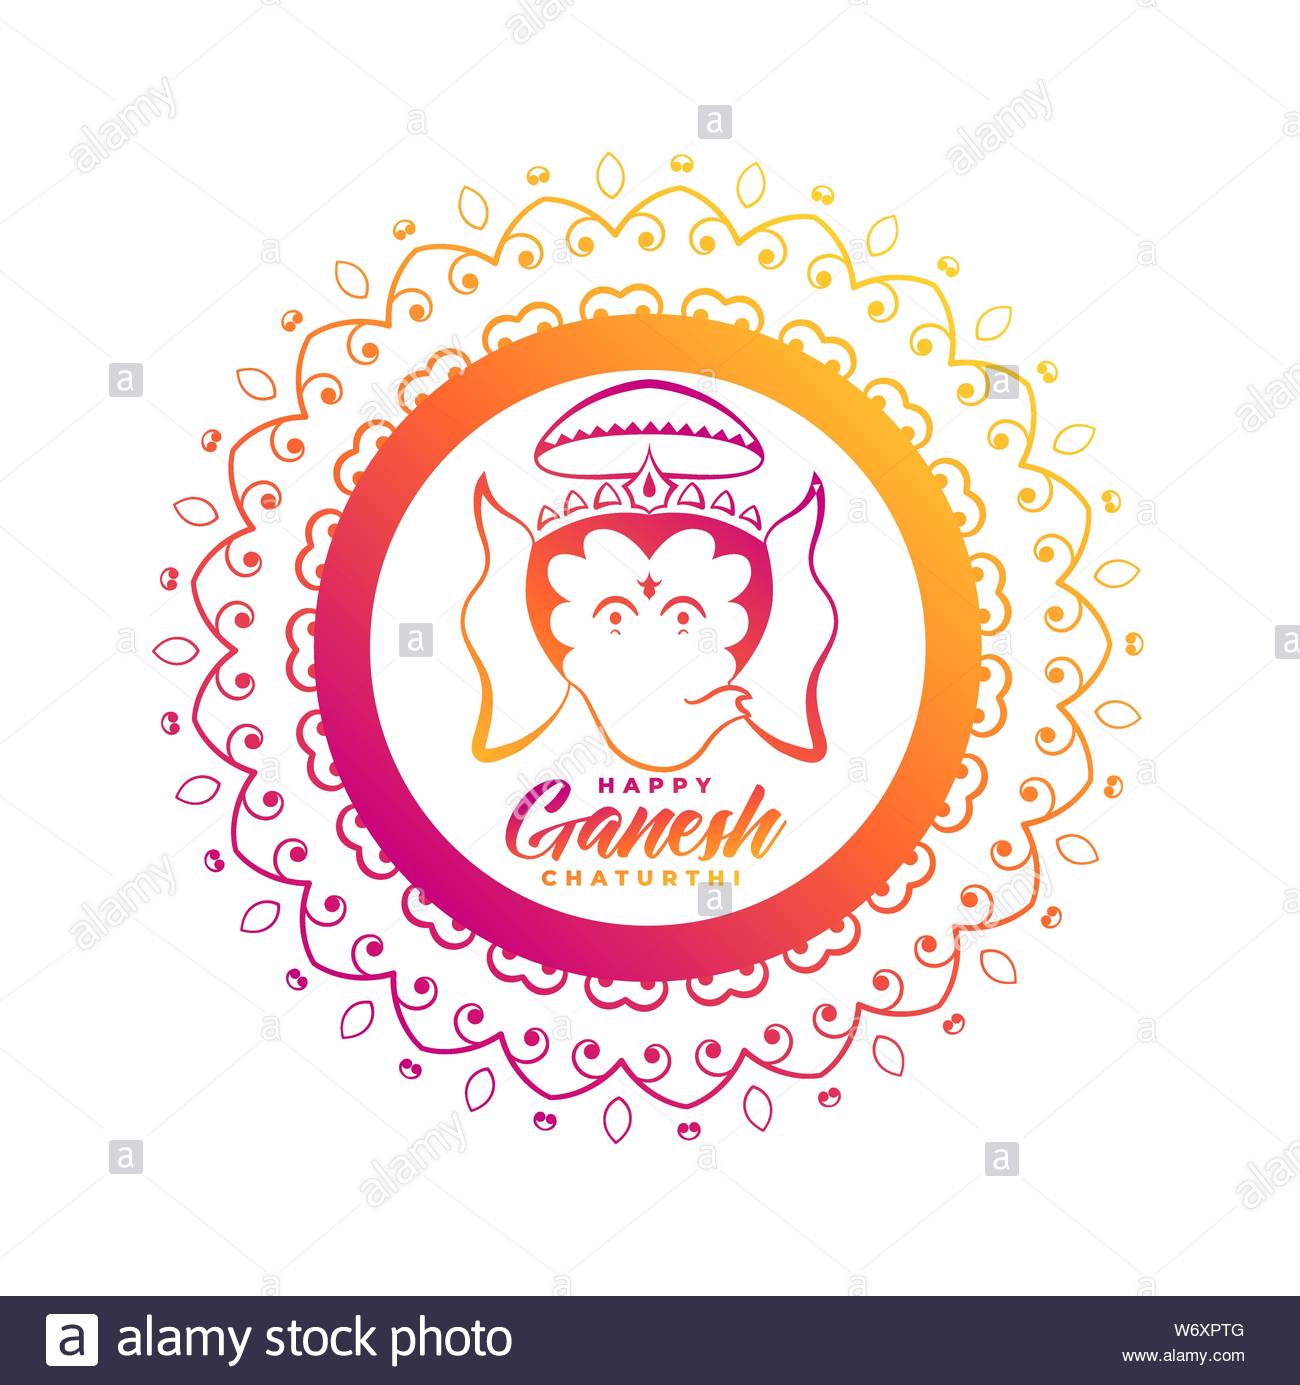 Download Free Ganesha Mandala High Resolution Stock Photography And Images Alamy PSD Mockup Template